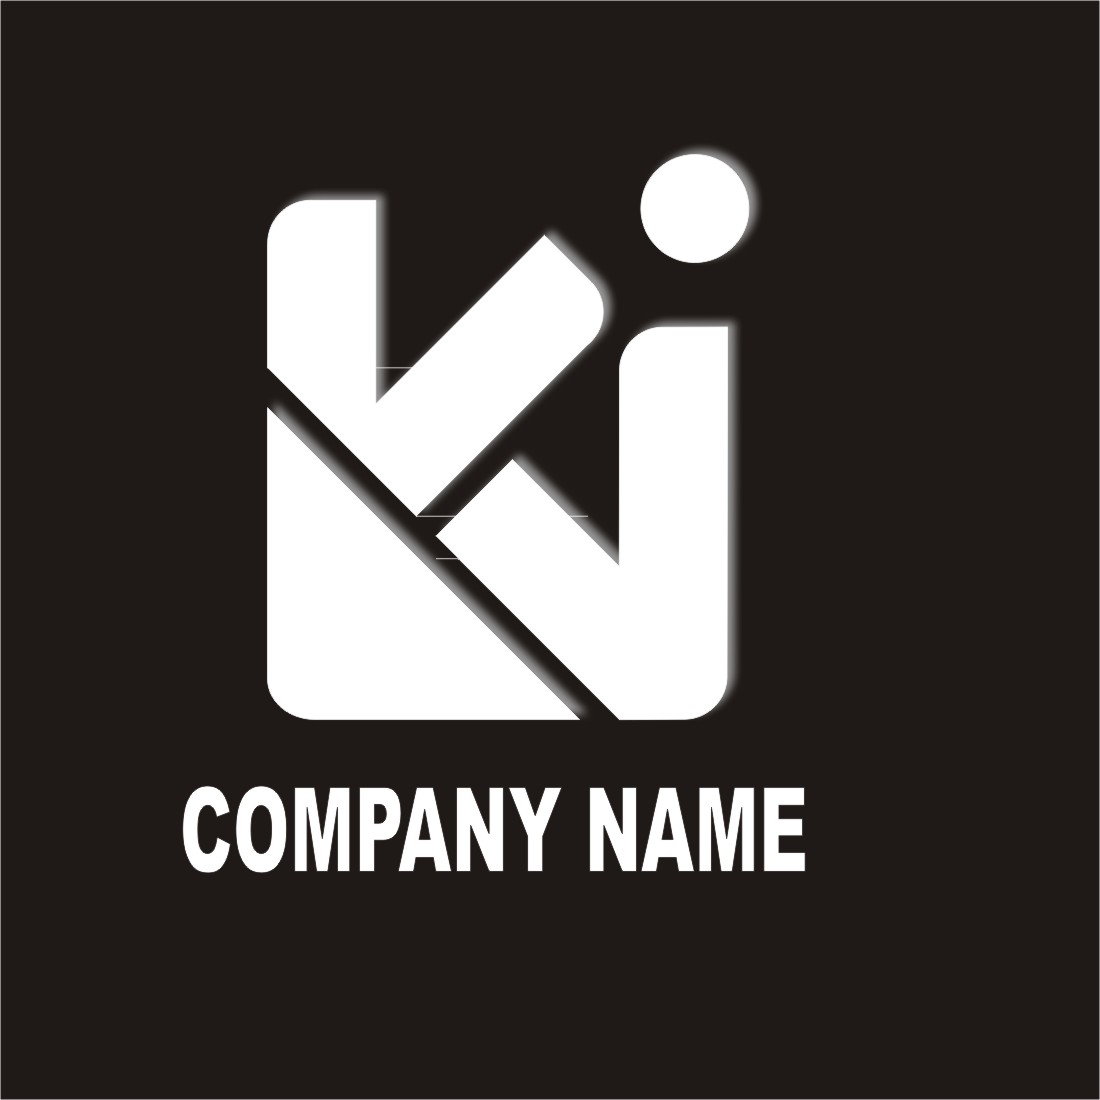 ''K'' monogram logo preview image.